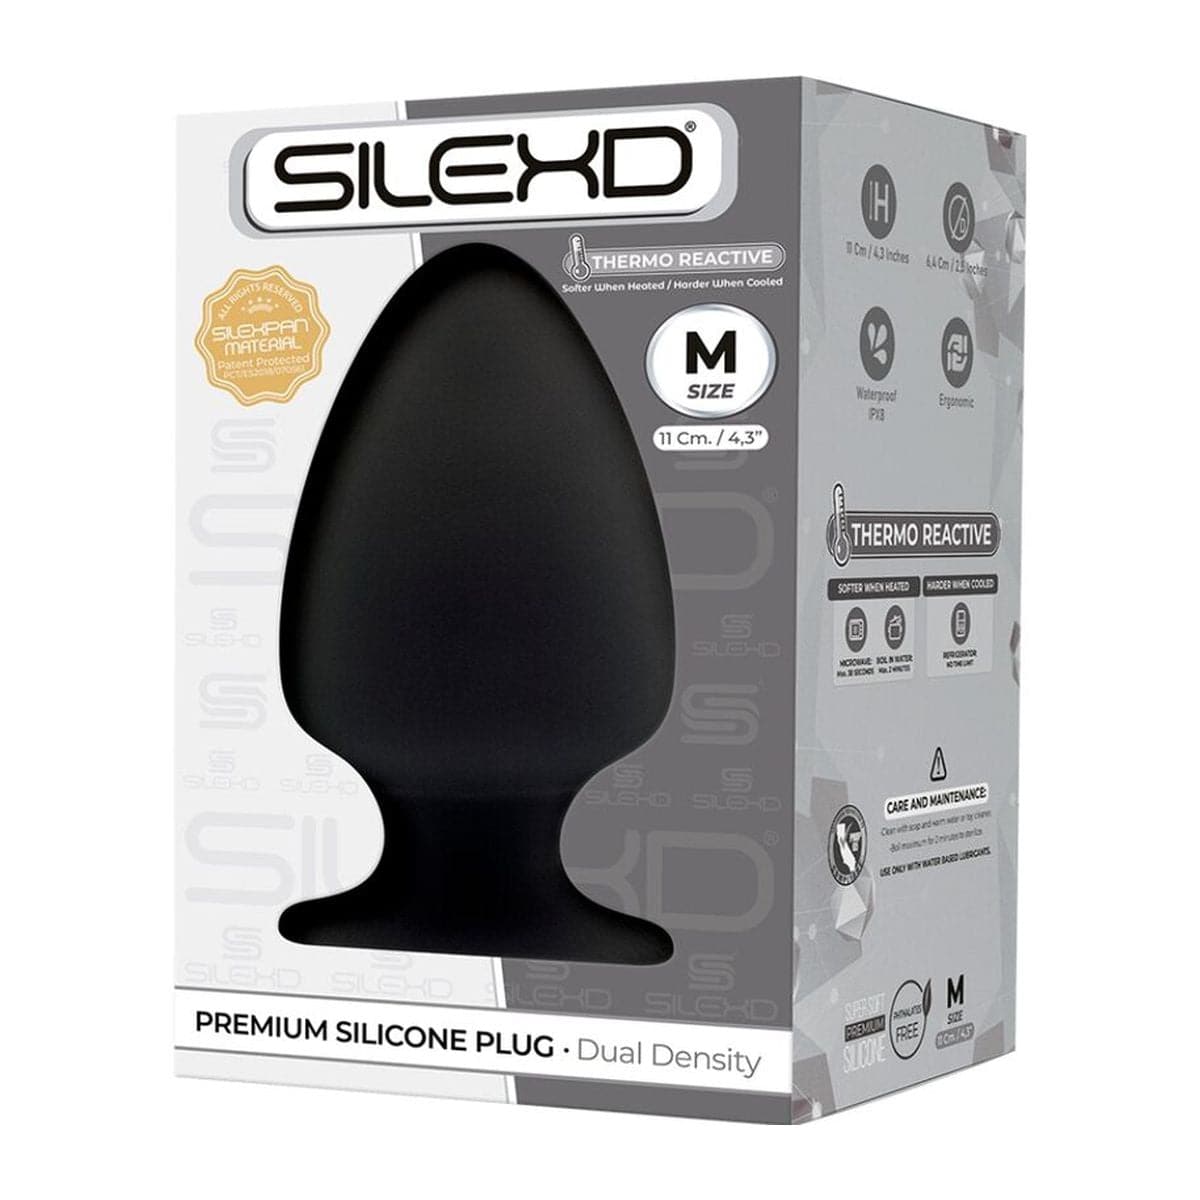 Plug Anal Silexd 1 Premium Silicone M, 11cm Ø6.4cm